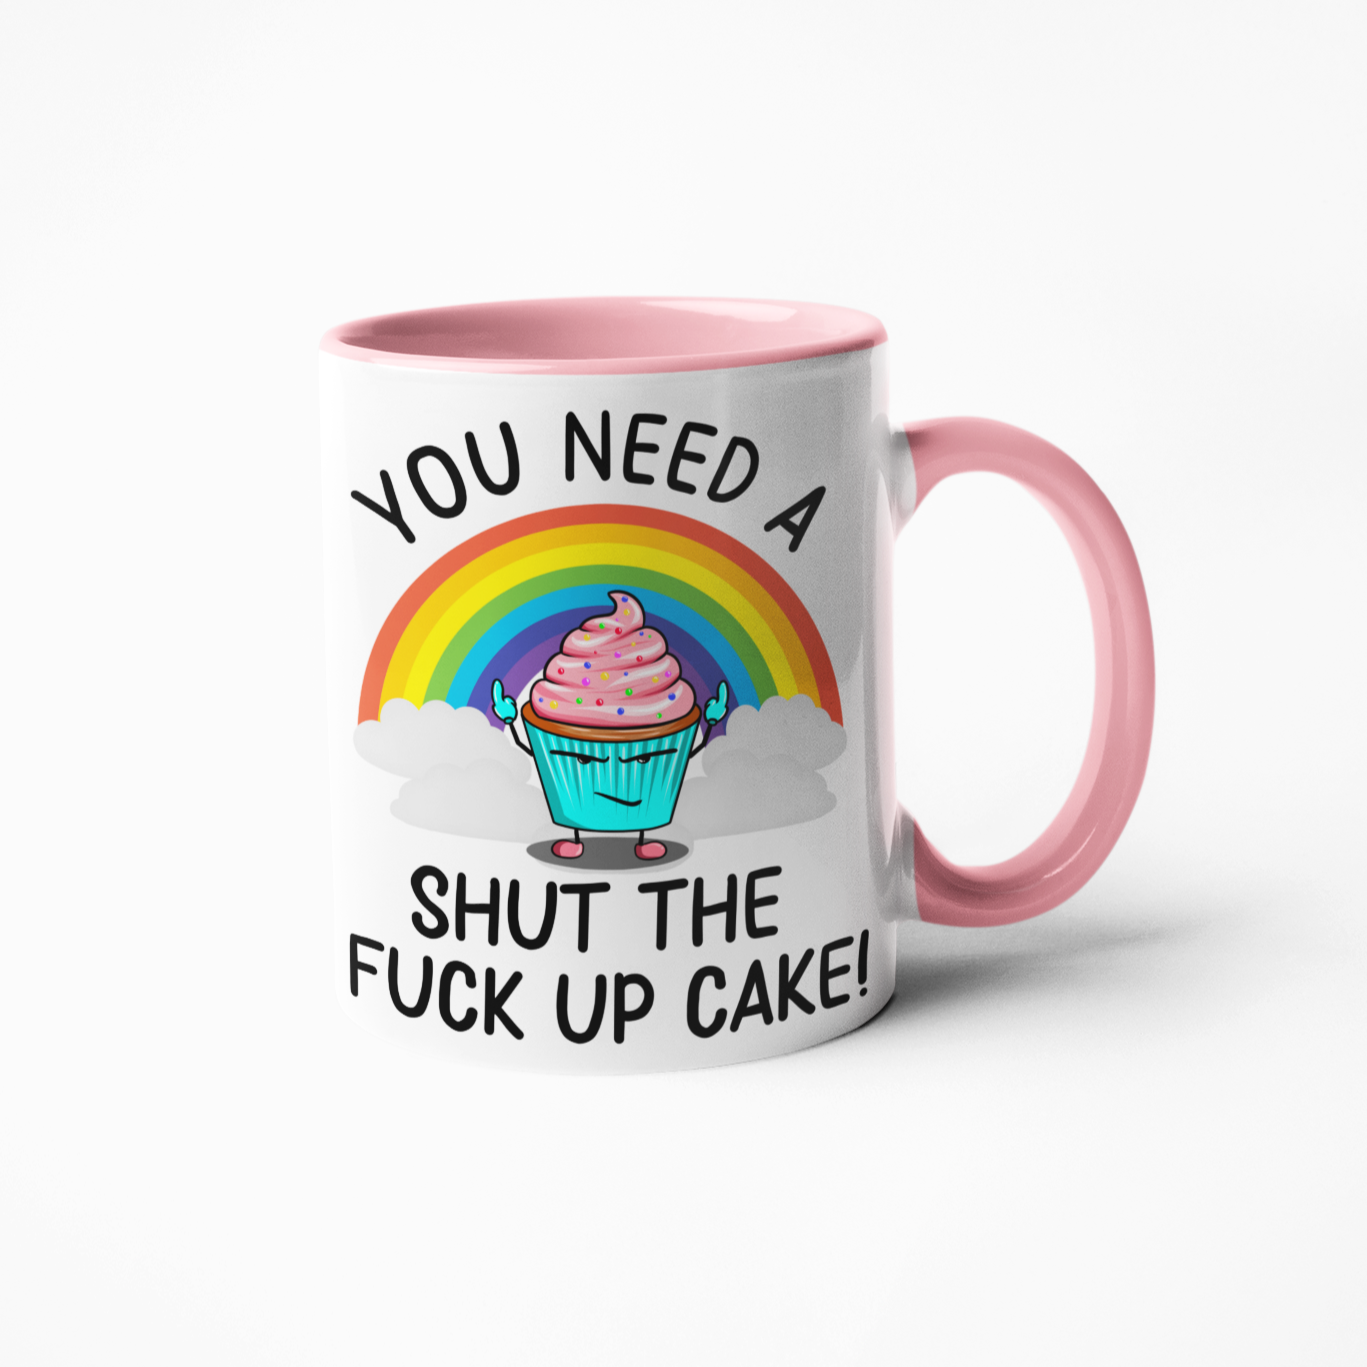 You need a shut the fuck up cake funny coffee mug